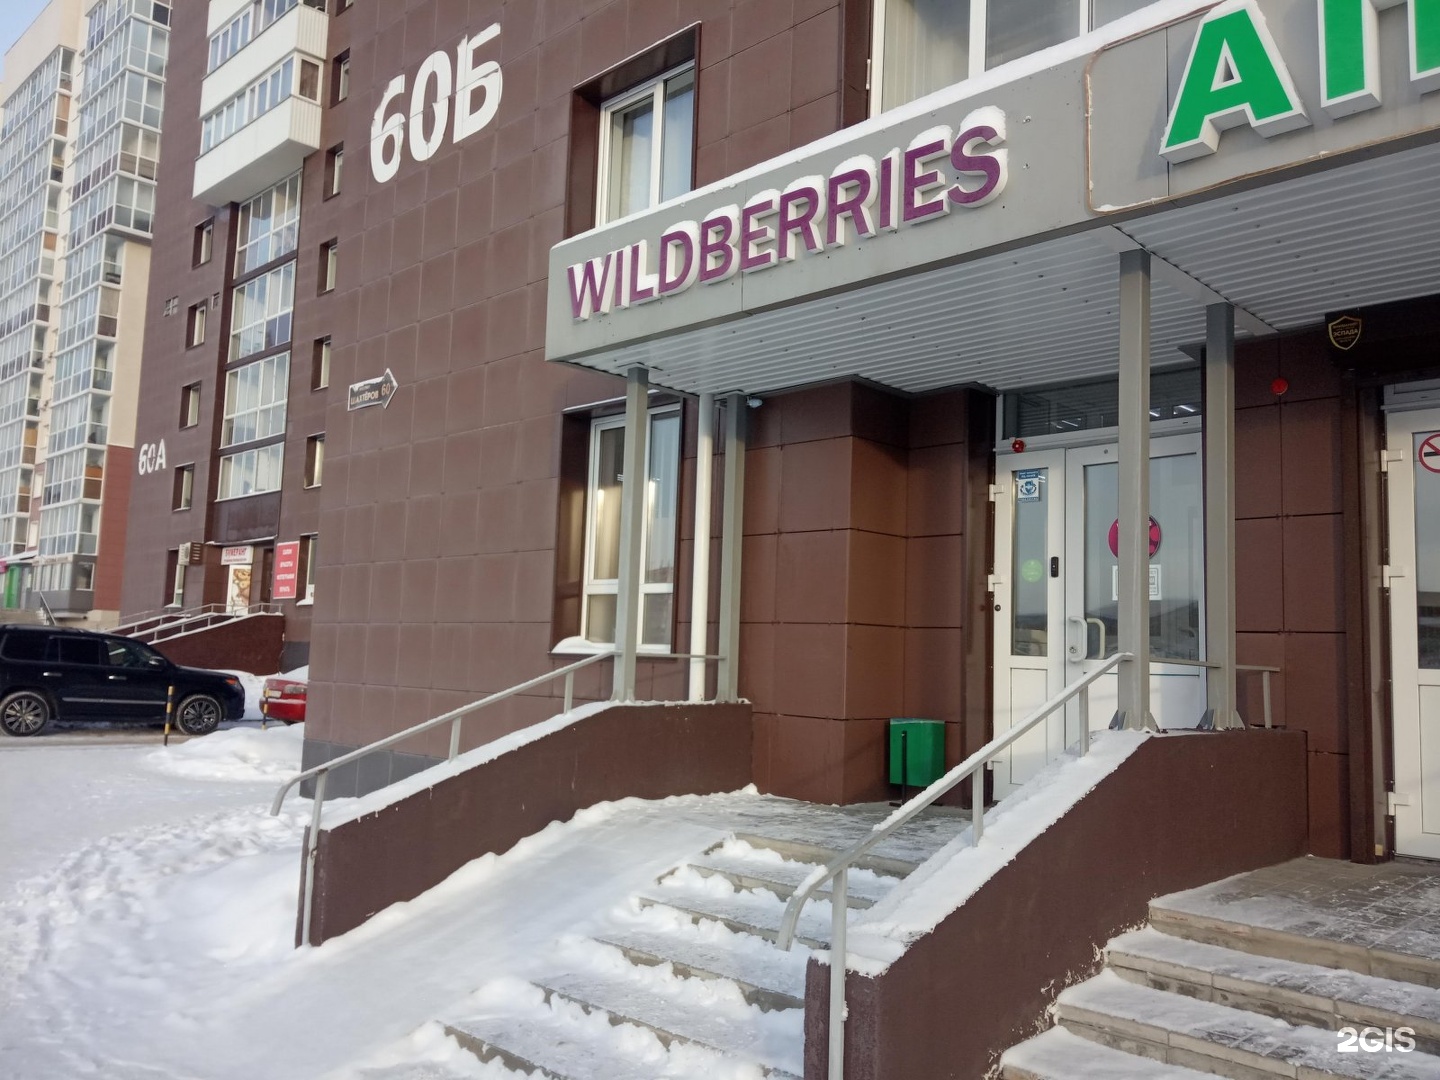 Интернет Магазин Wildberries Кемерово